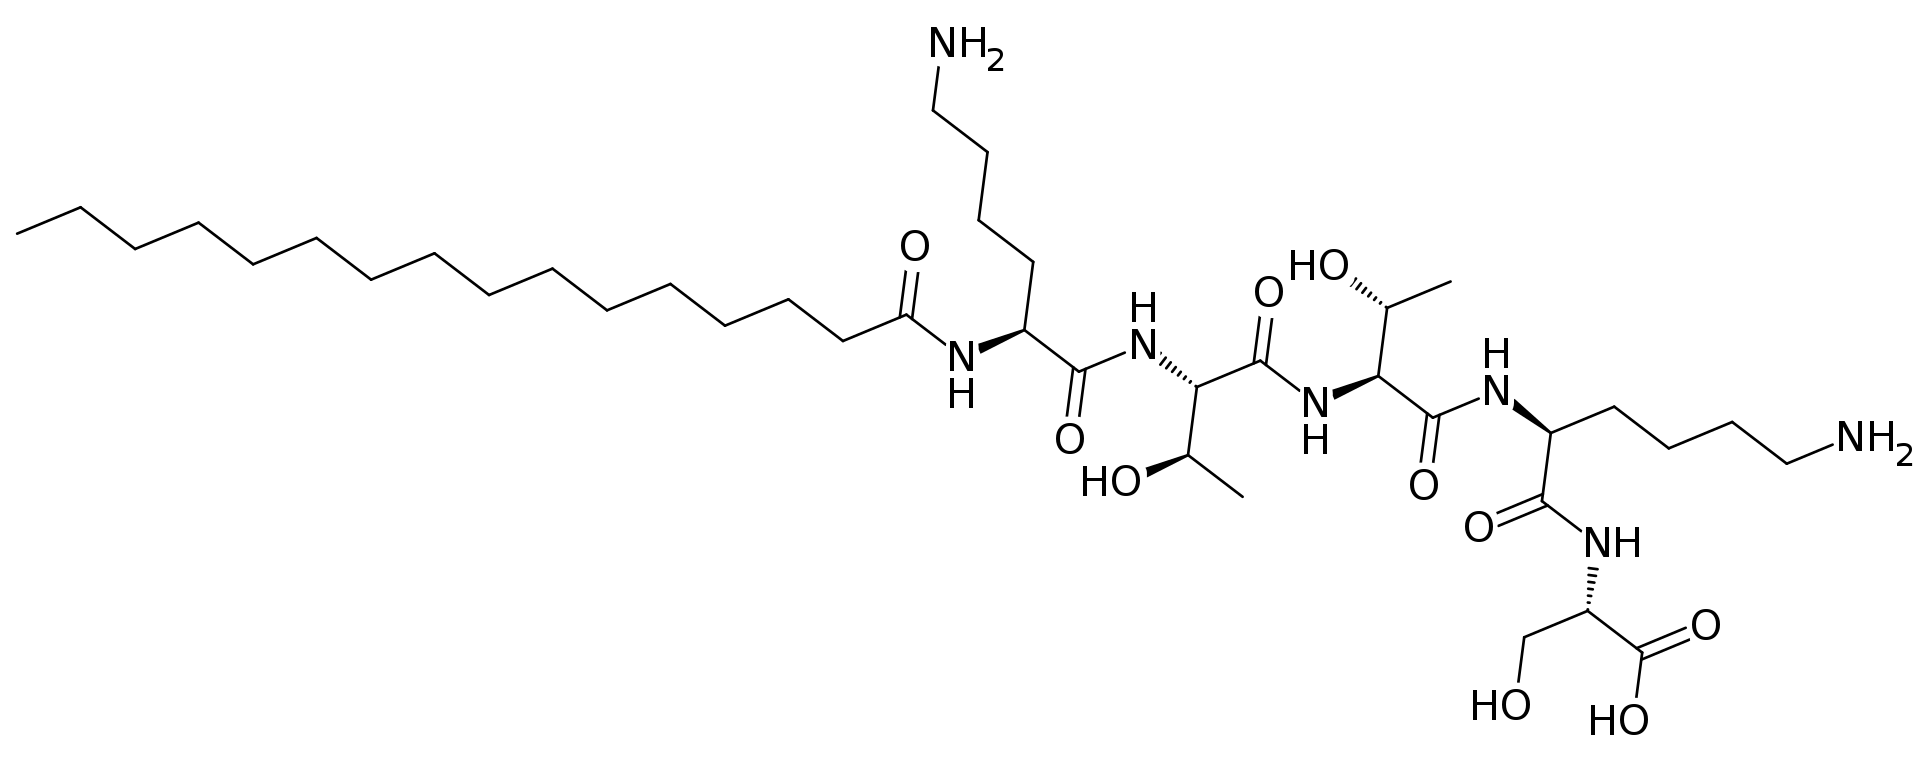 Matrixyl 3000, chemically known as Palmitoyl Pentapeptide-4